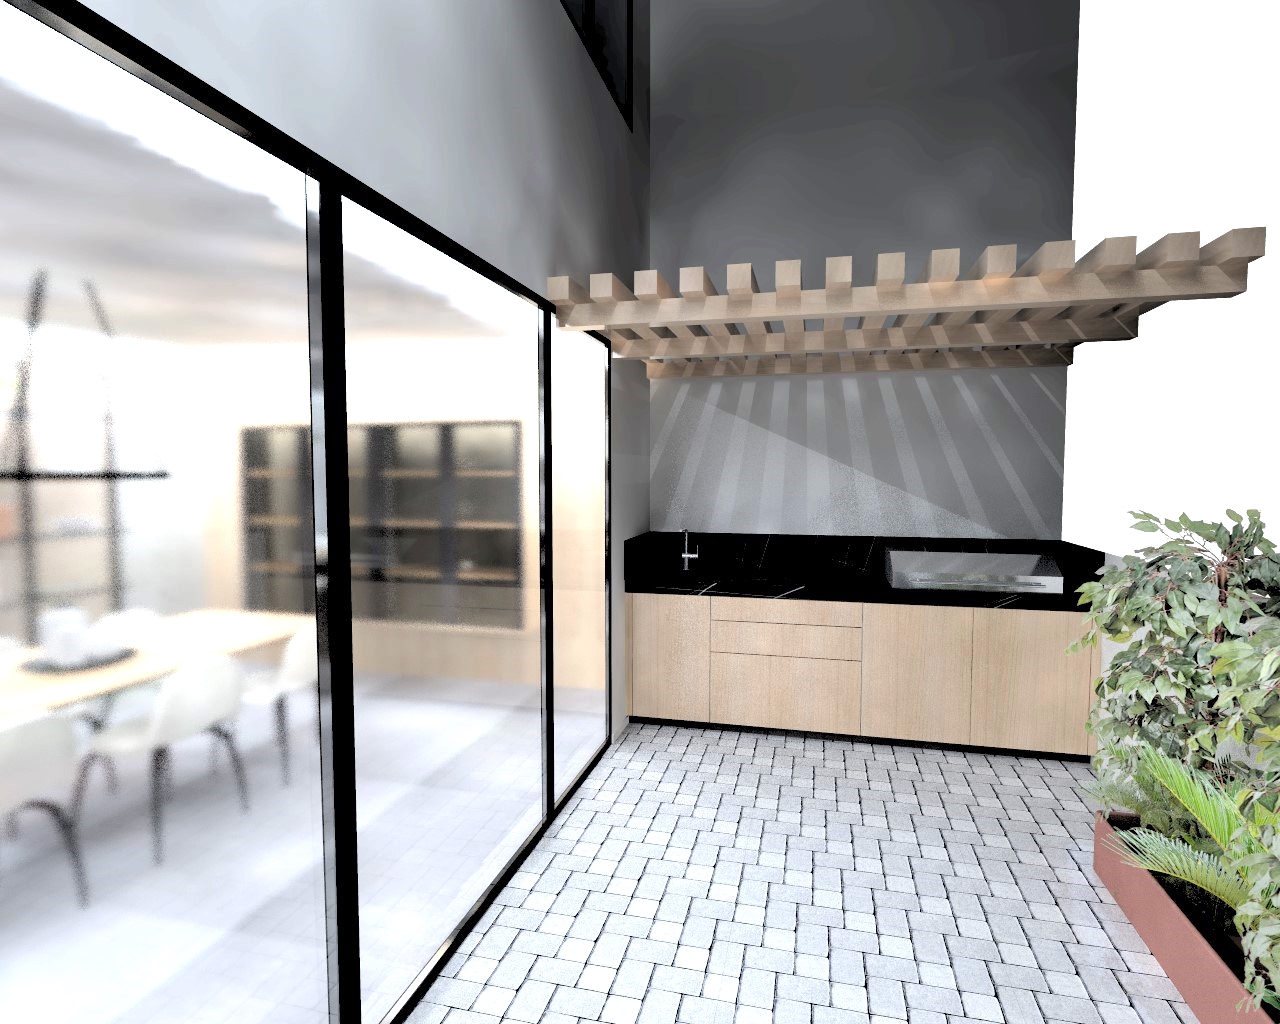 the exterior kitchen